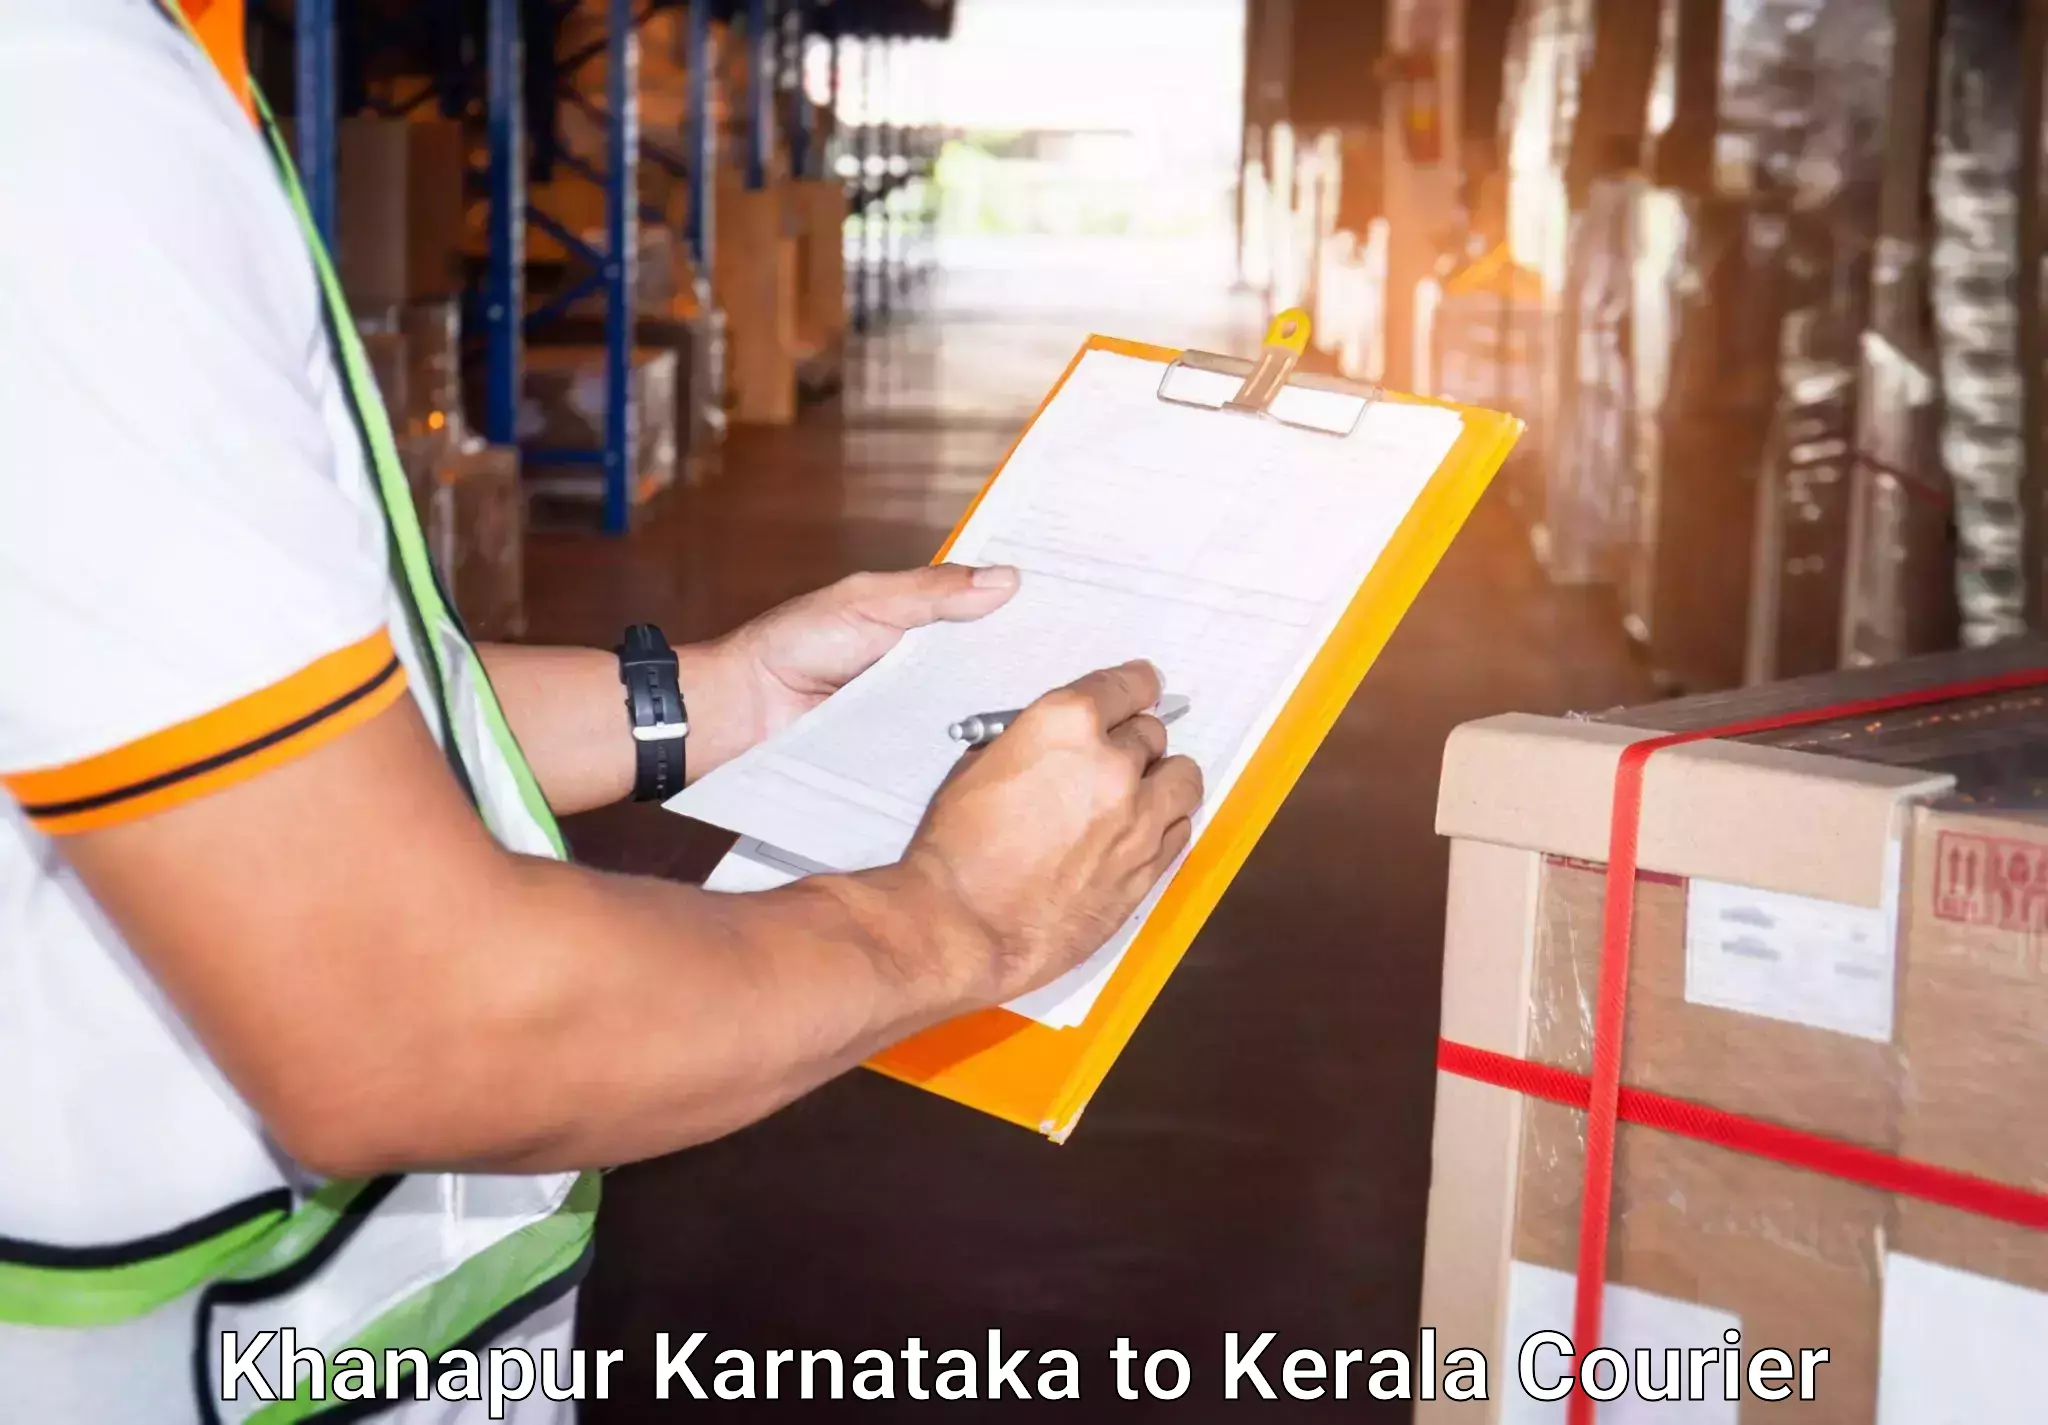 Doorstep luggage collection Khanapur Karnataka to Kerala